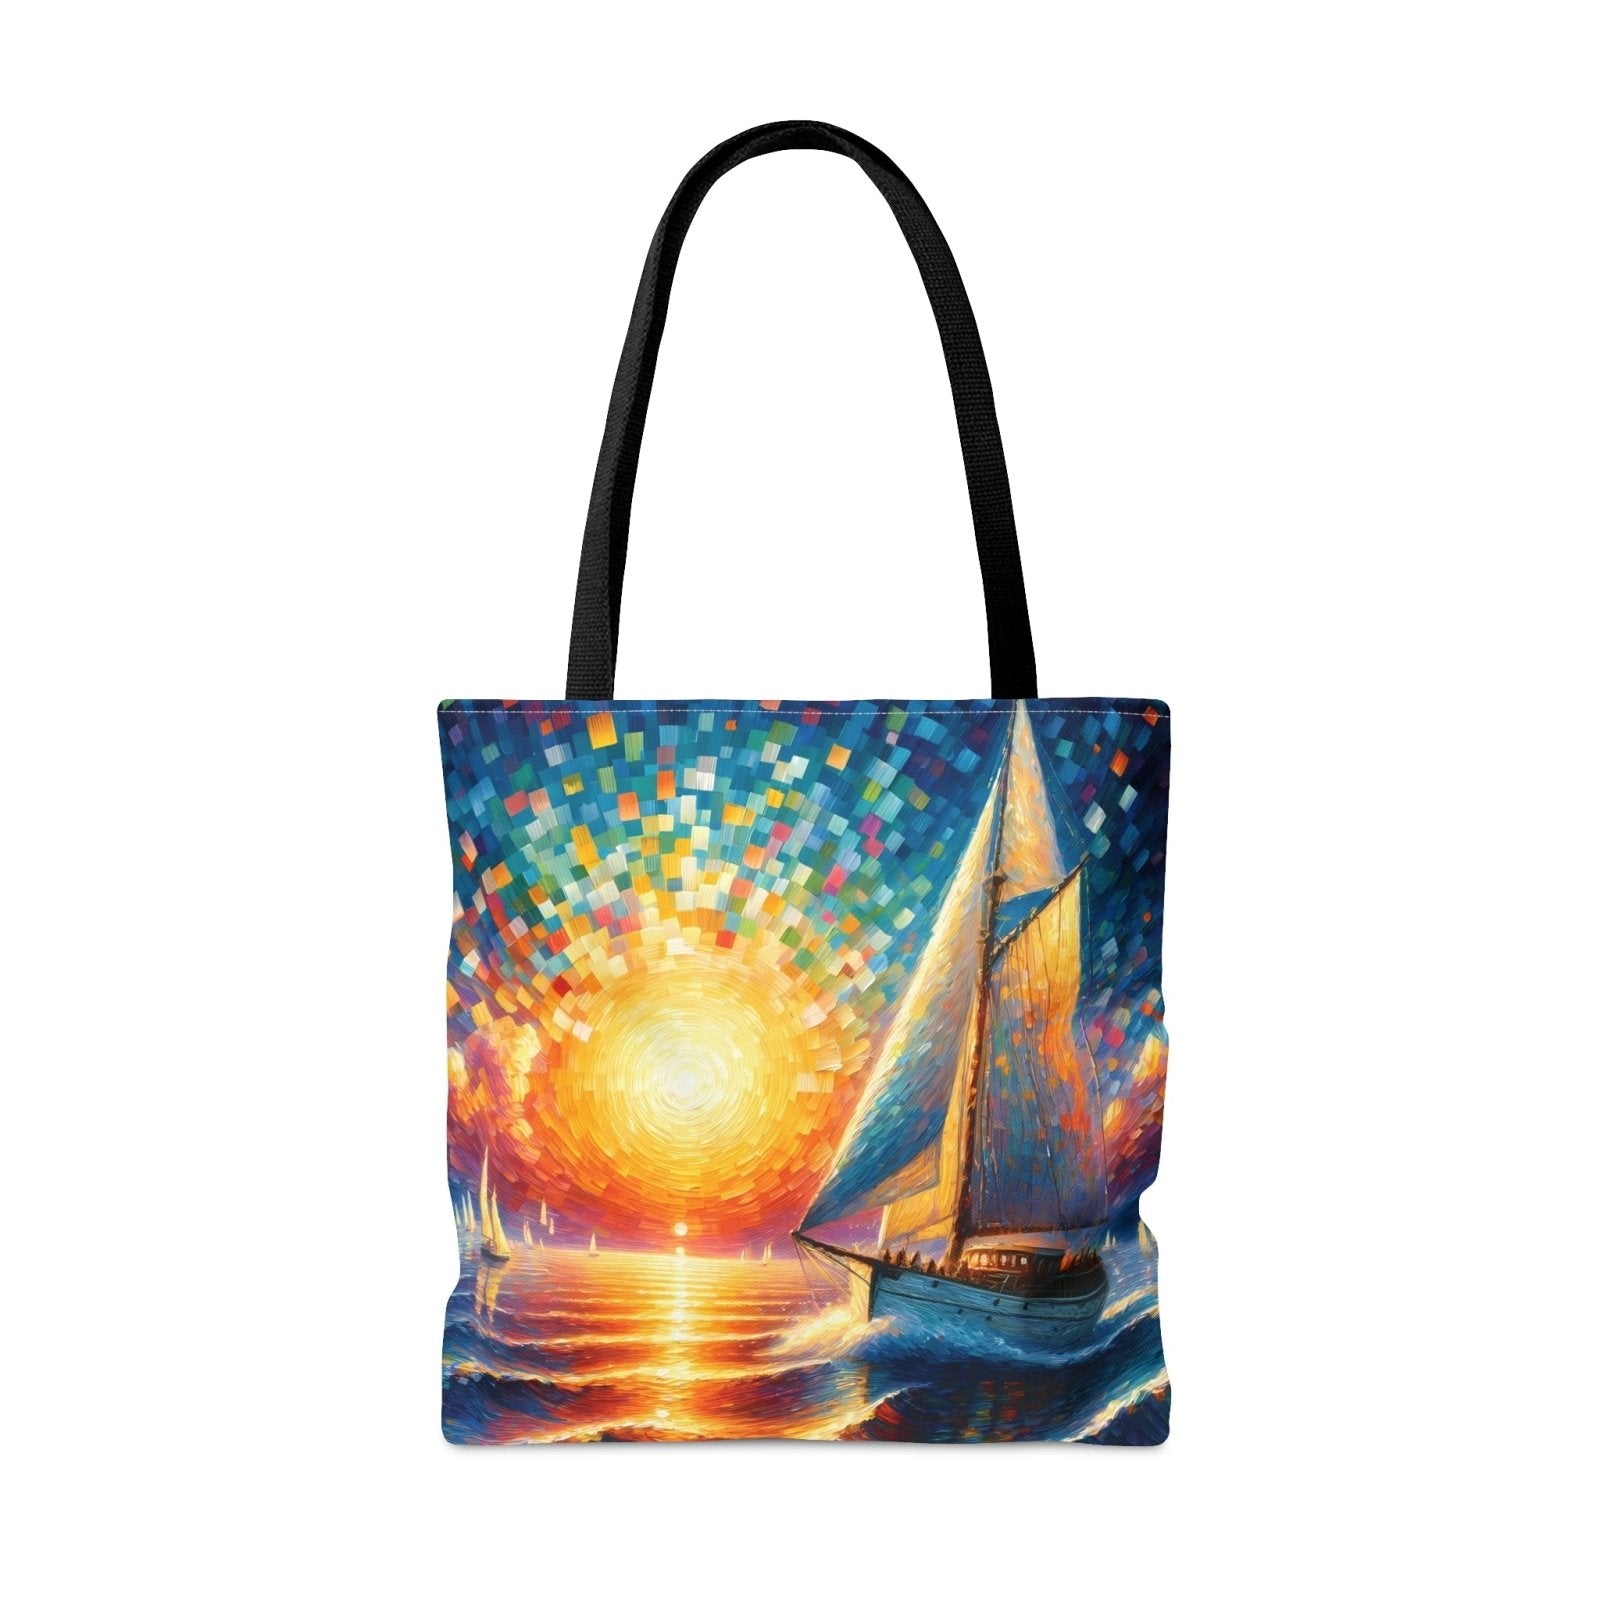 Mosaic Voyage Tote Bag, sailing tote, nautical fashion, sailboat mosaic bag - Subtle Blue M